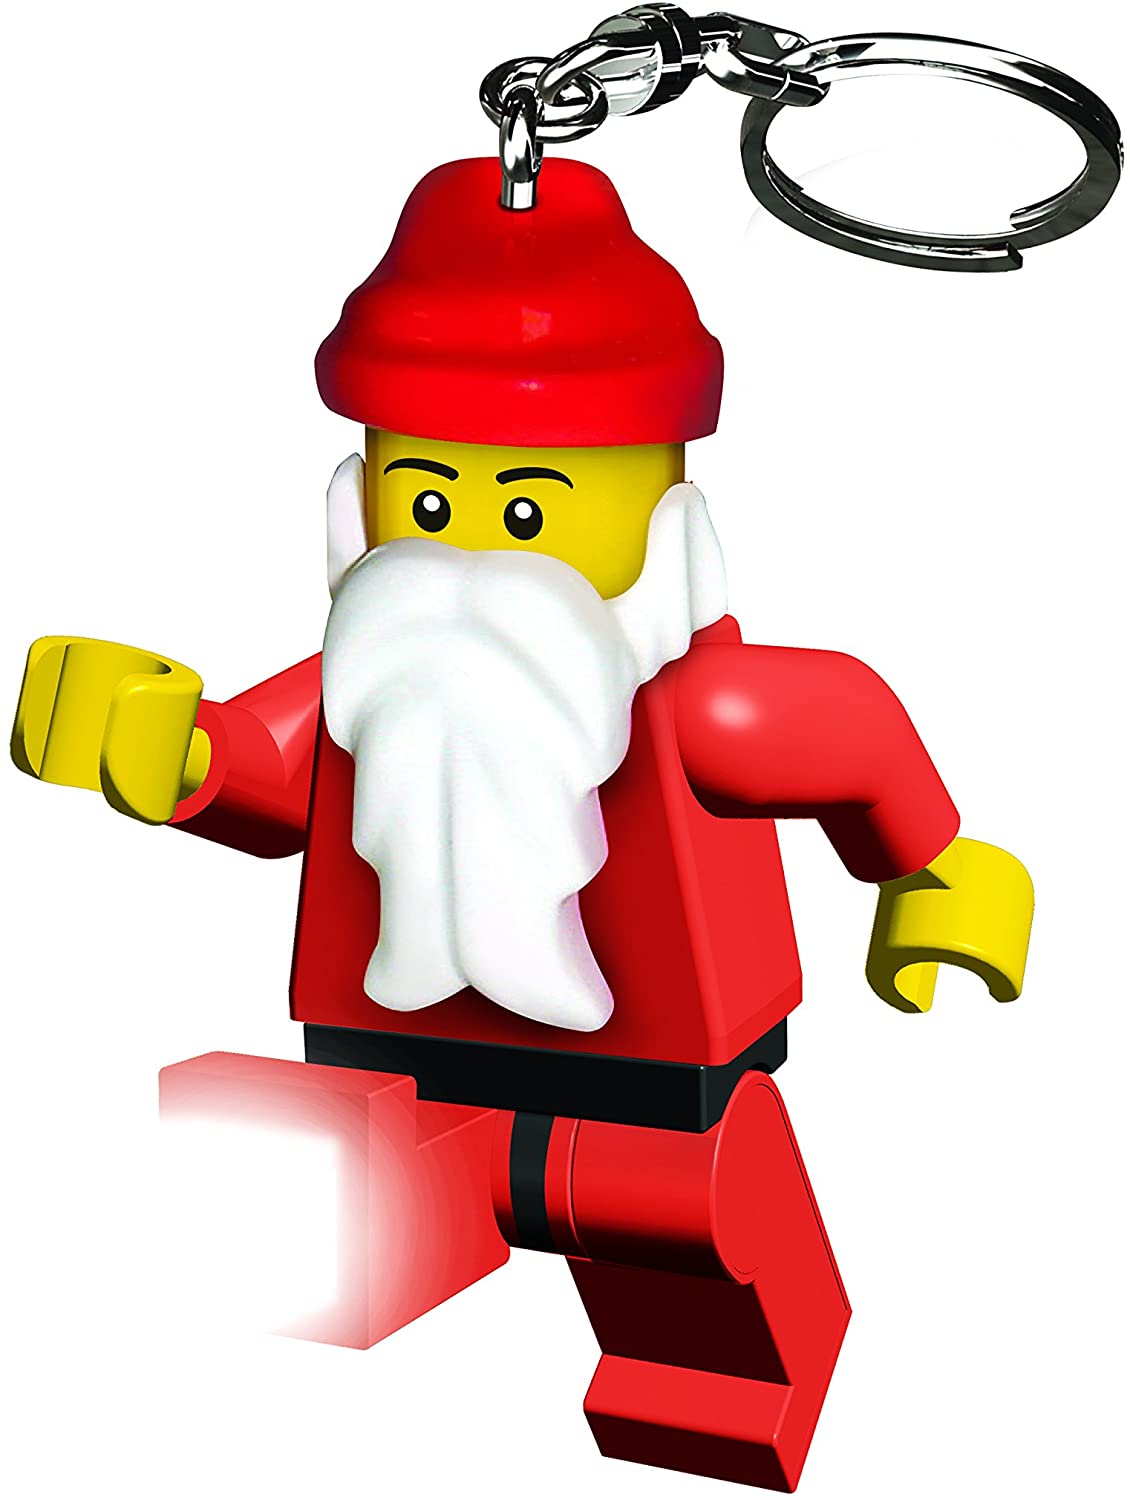 25 LEGO Portachiavi Led - Babbo Natale